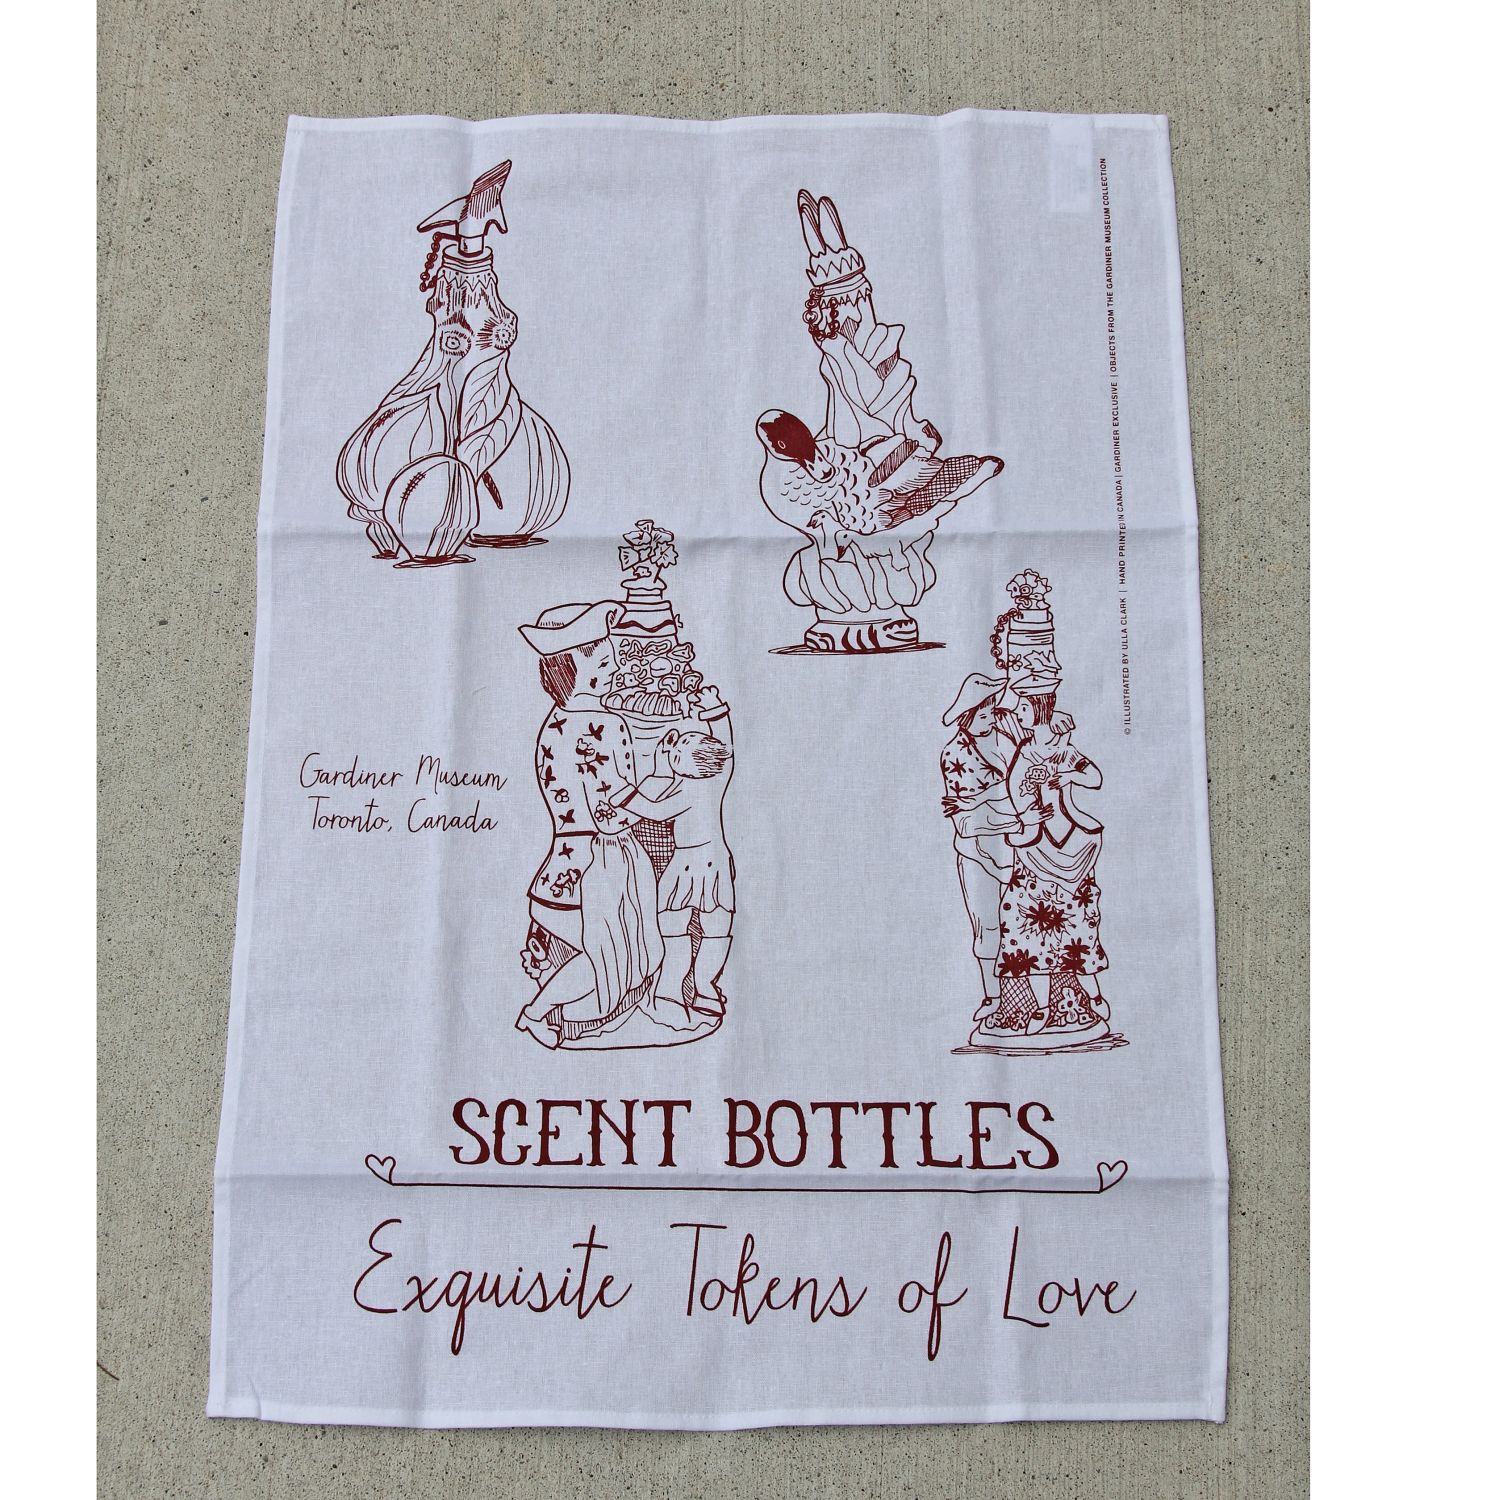 LUprints: Scent Bottles Teatowel Product Image 2 of 4